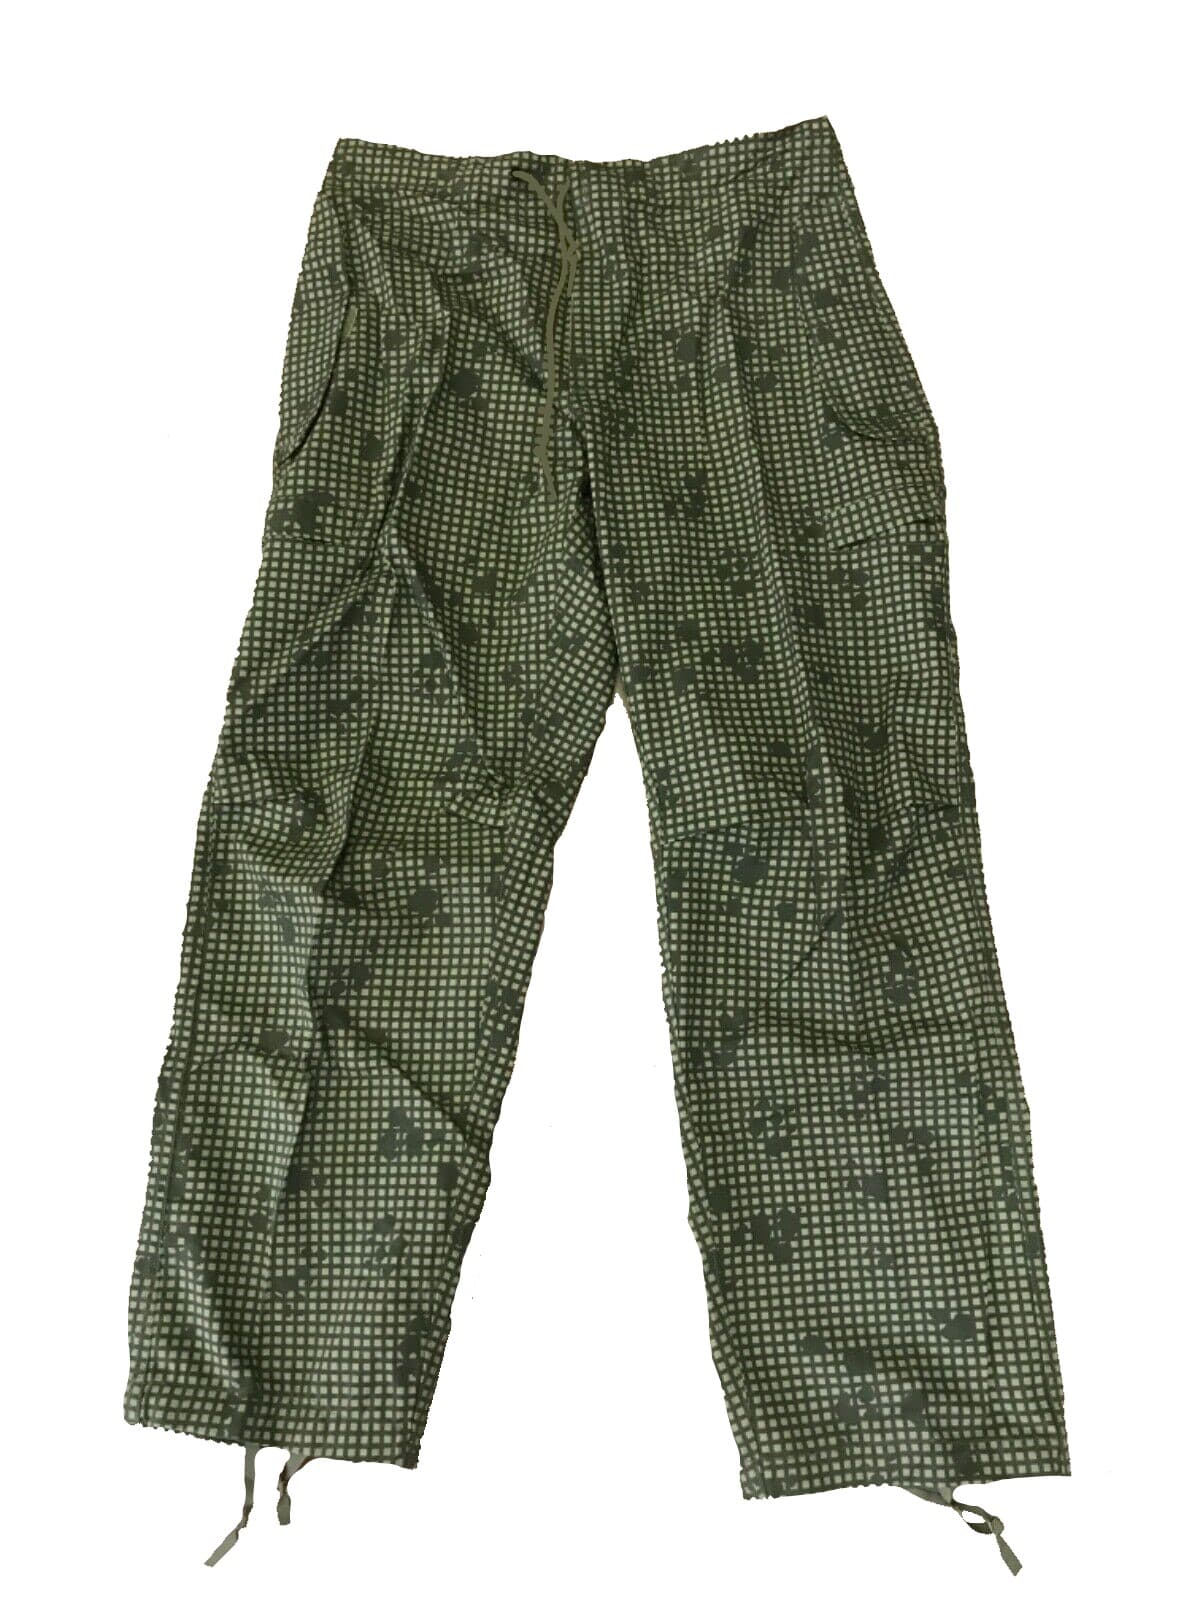 Night Desert Camo Pants, Size Small - Omahas Army Navy Surplus